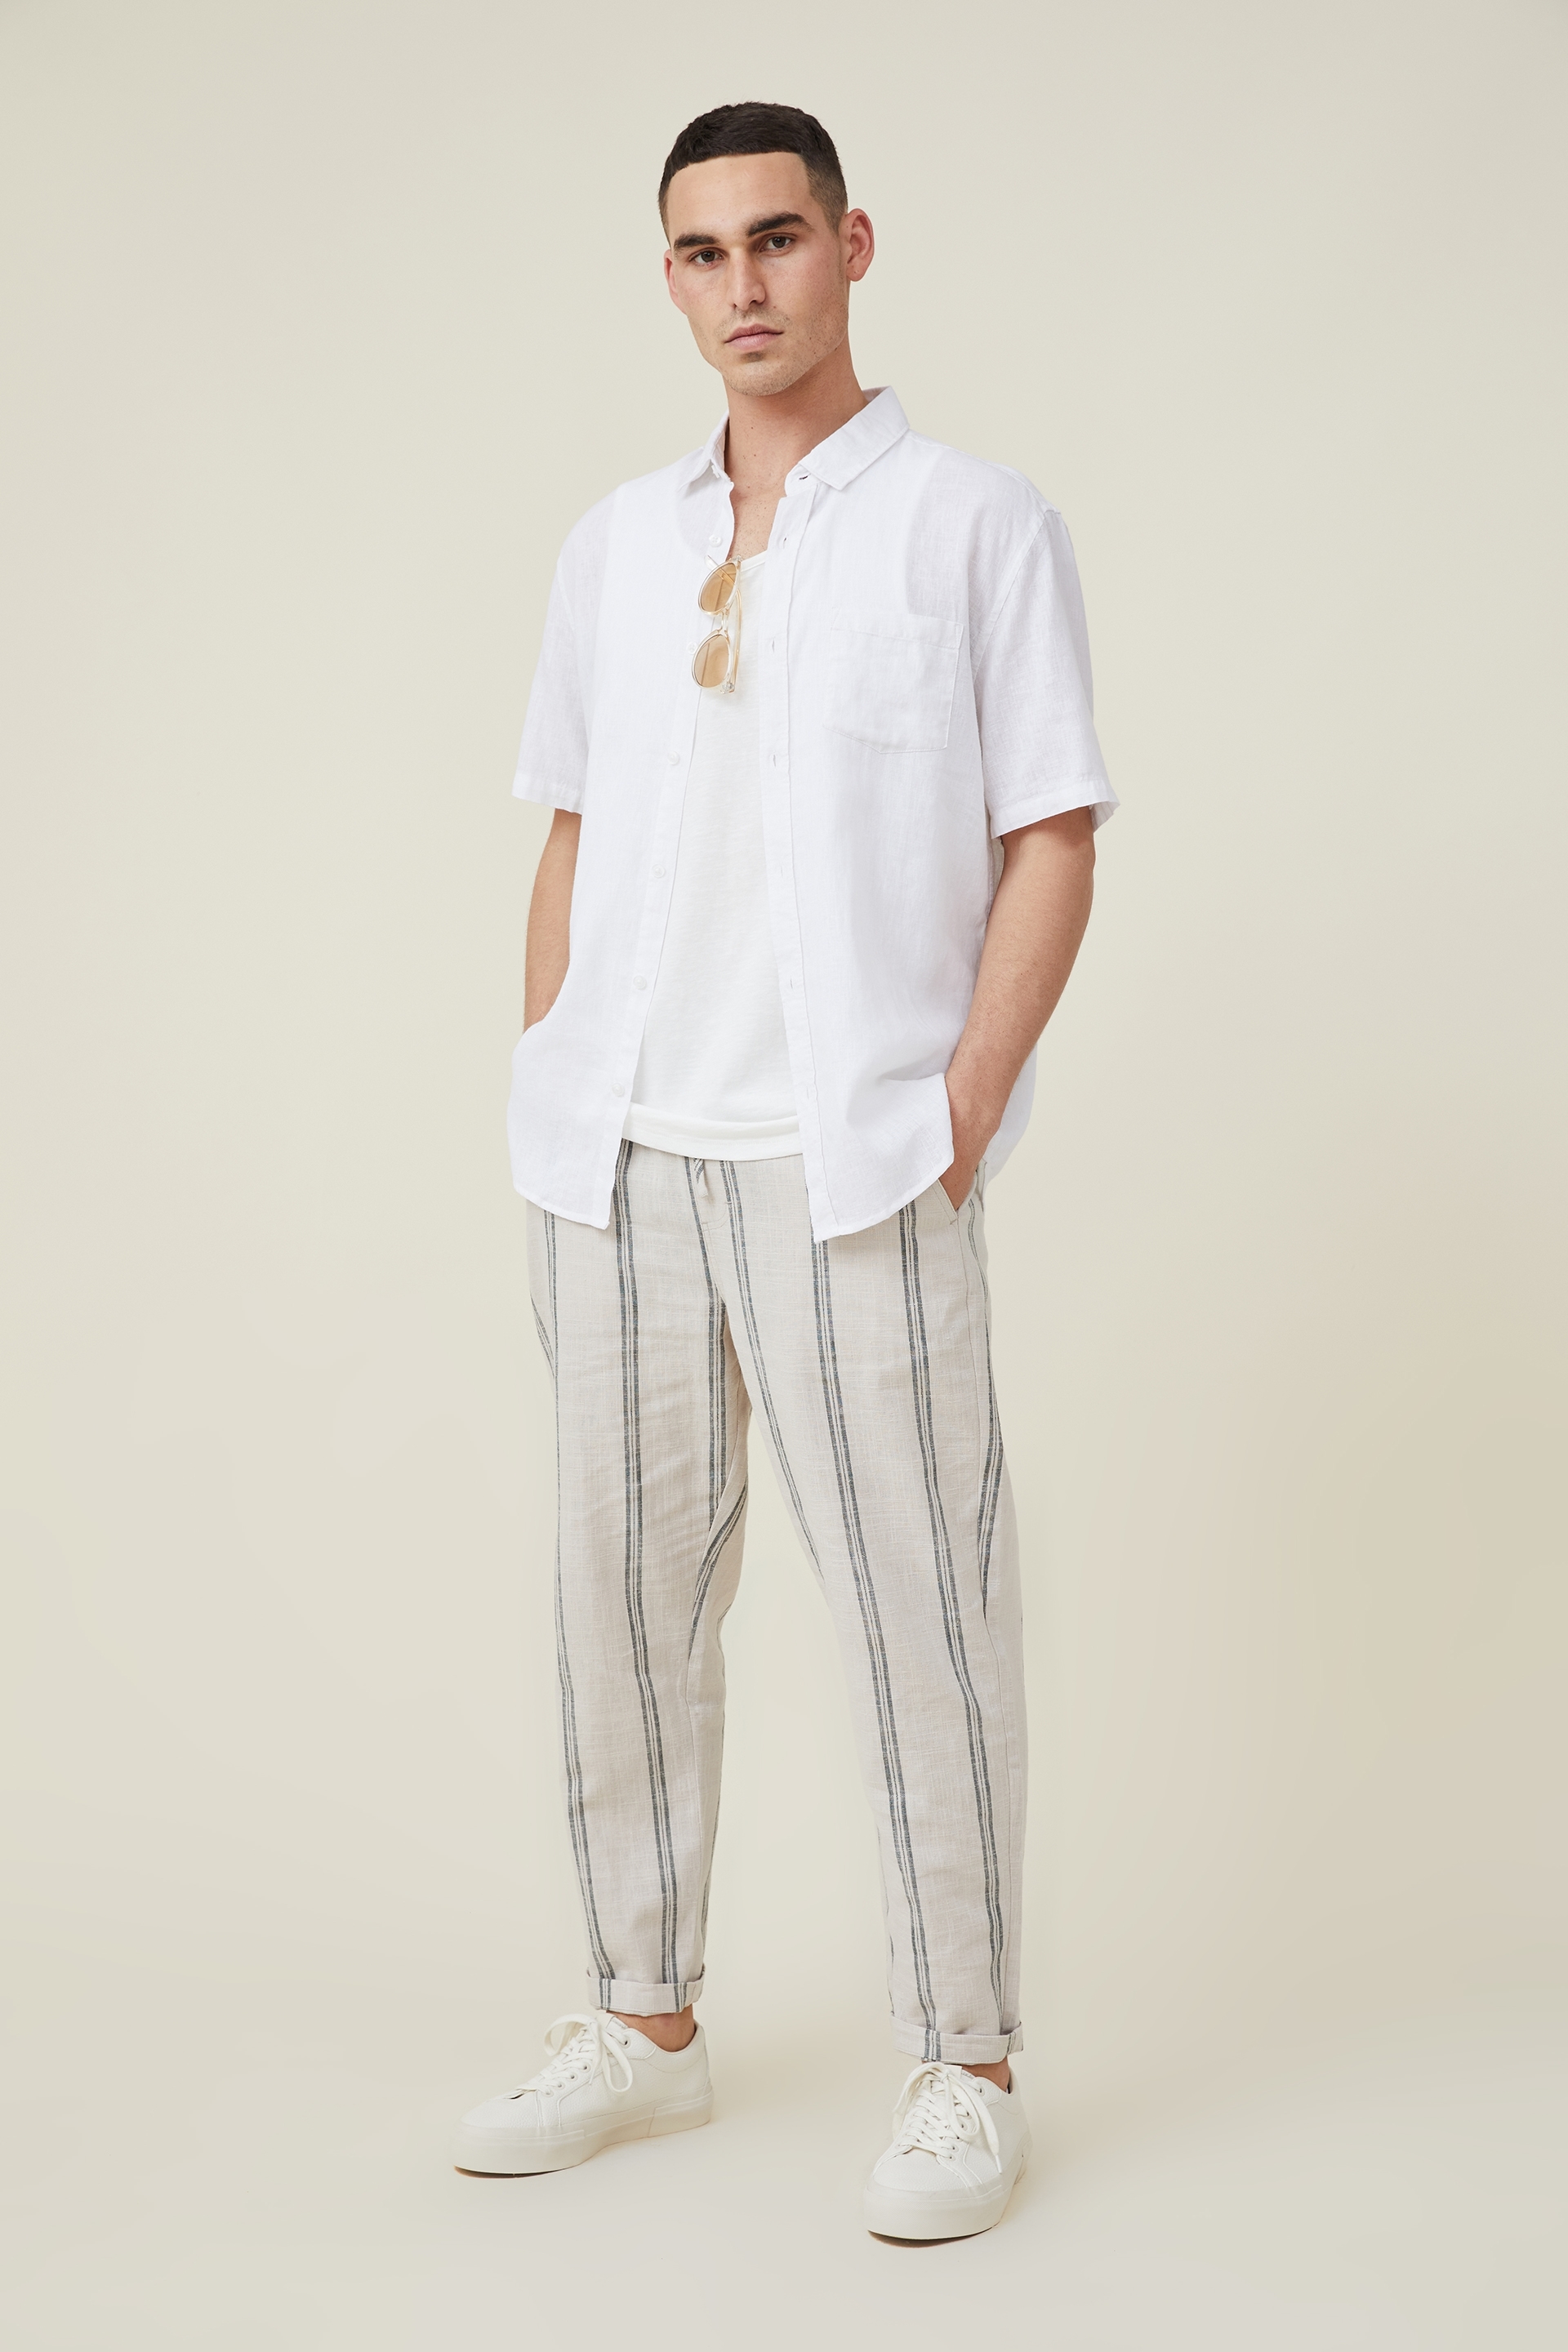 Cotton On Men - East Coast Textured Pant - Oatmeal stripe